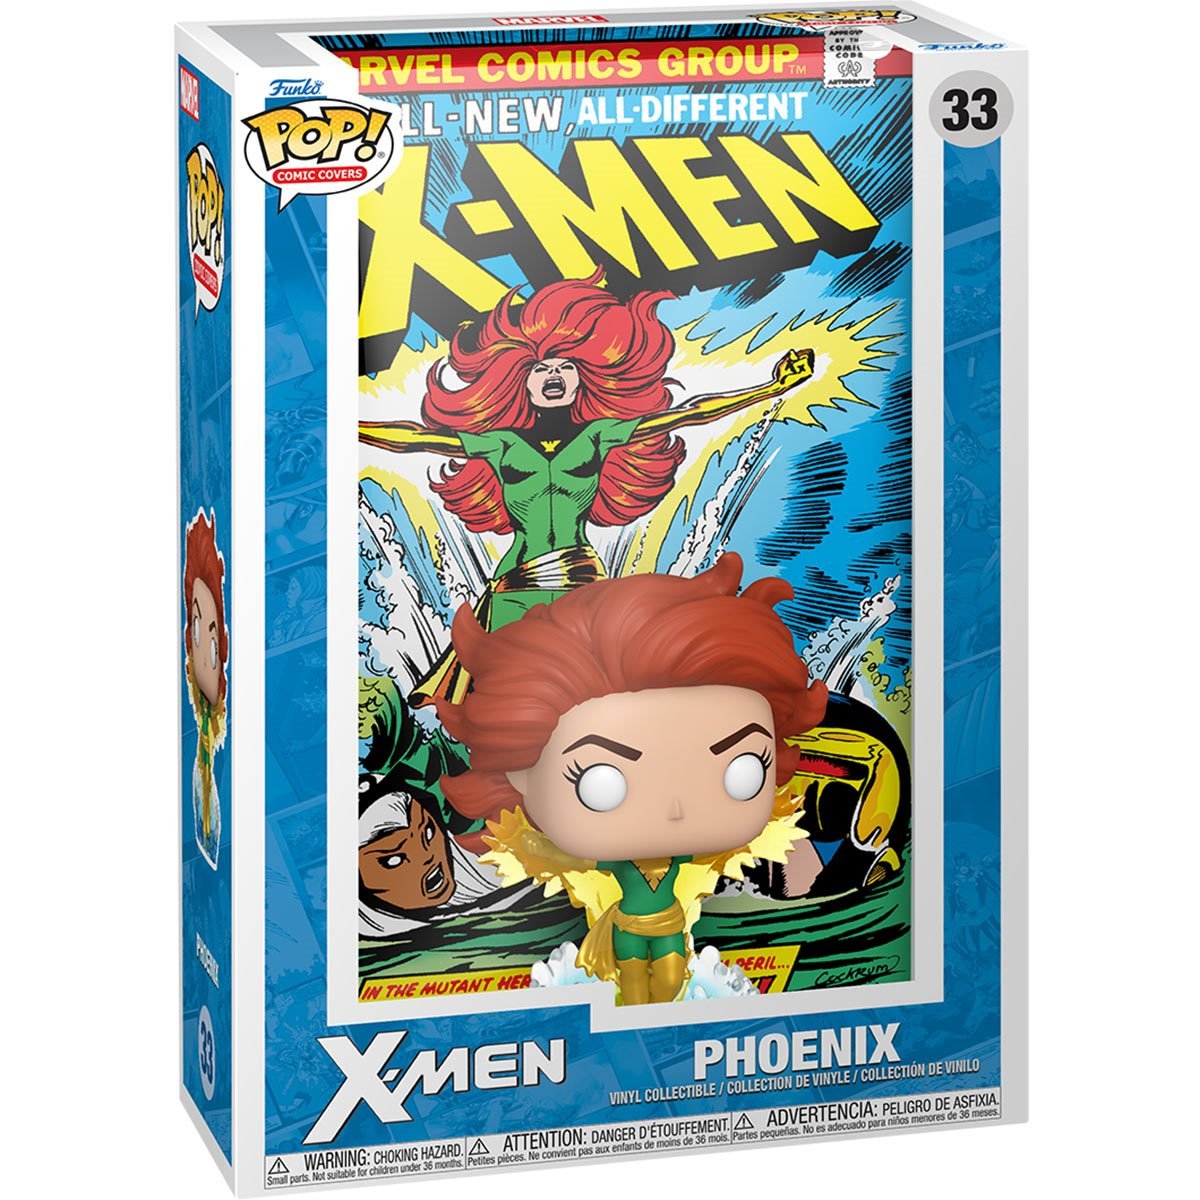 POP! Marvel Comic Cover X-Men Phoenix #33